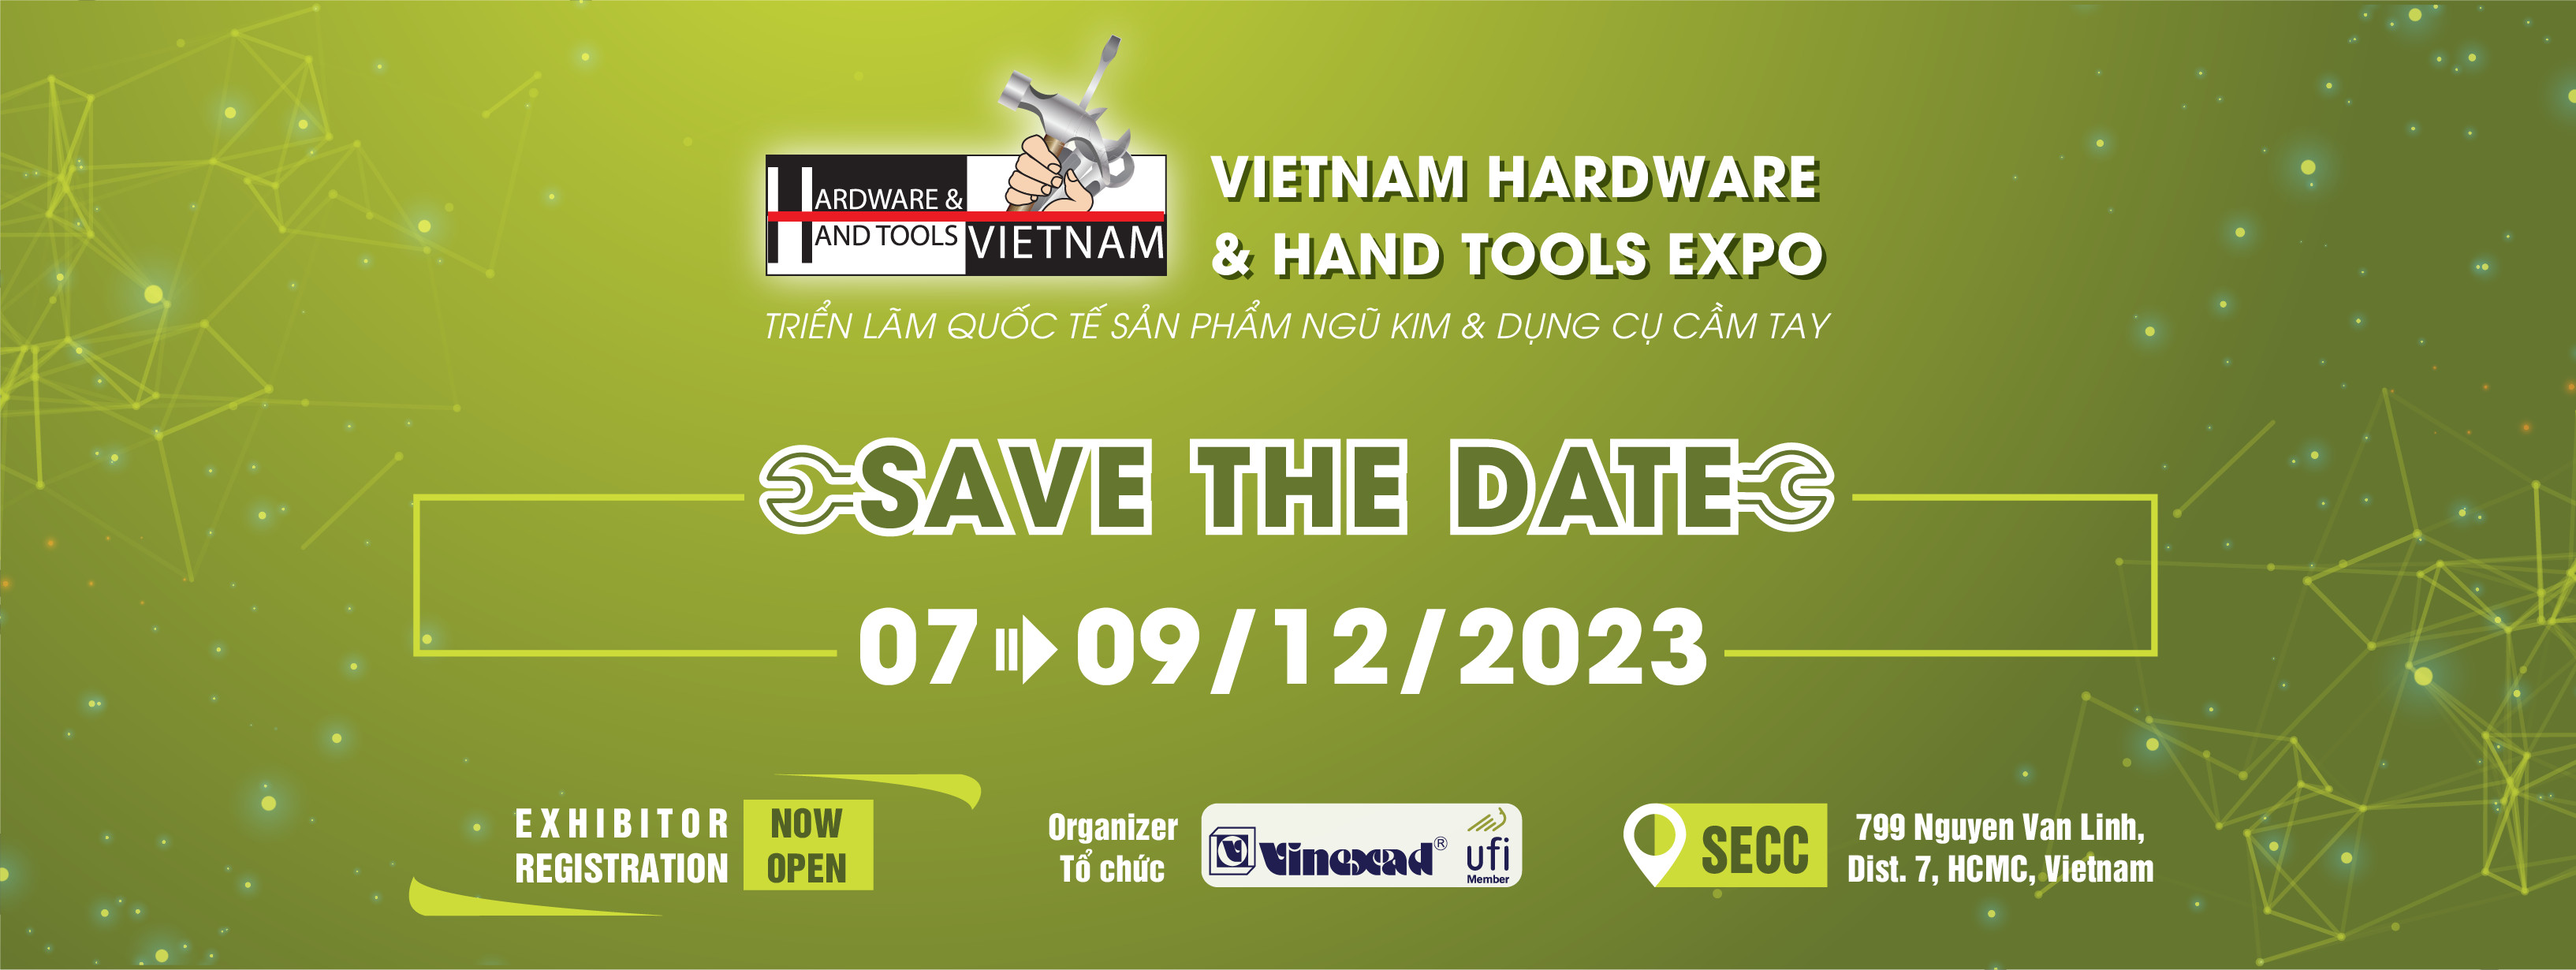 Vietnam Hardware & Hand Tools - Thiết kế gian hàng triển lãm Vietnam Hardware & Hand Tools